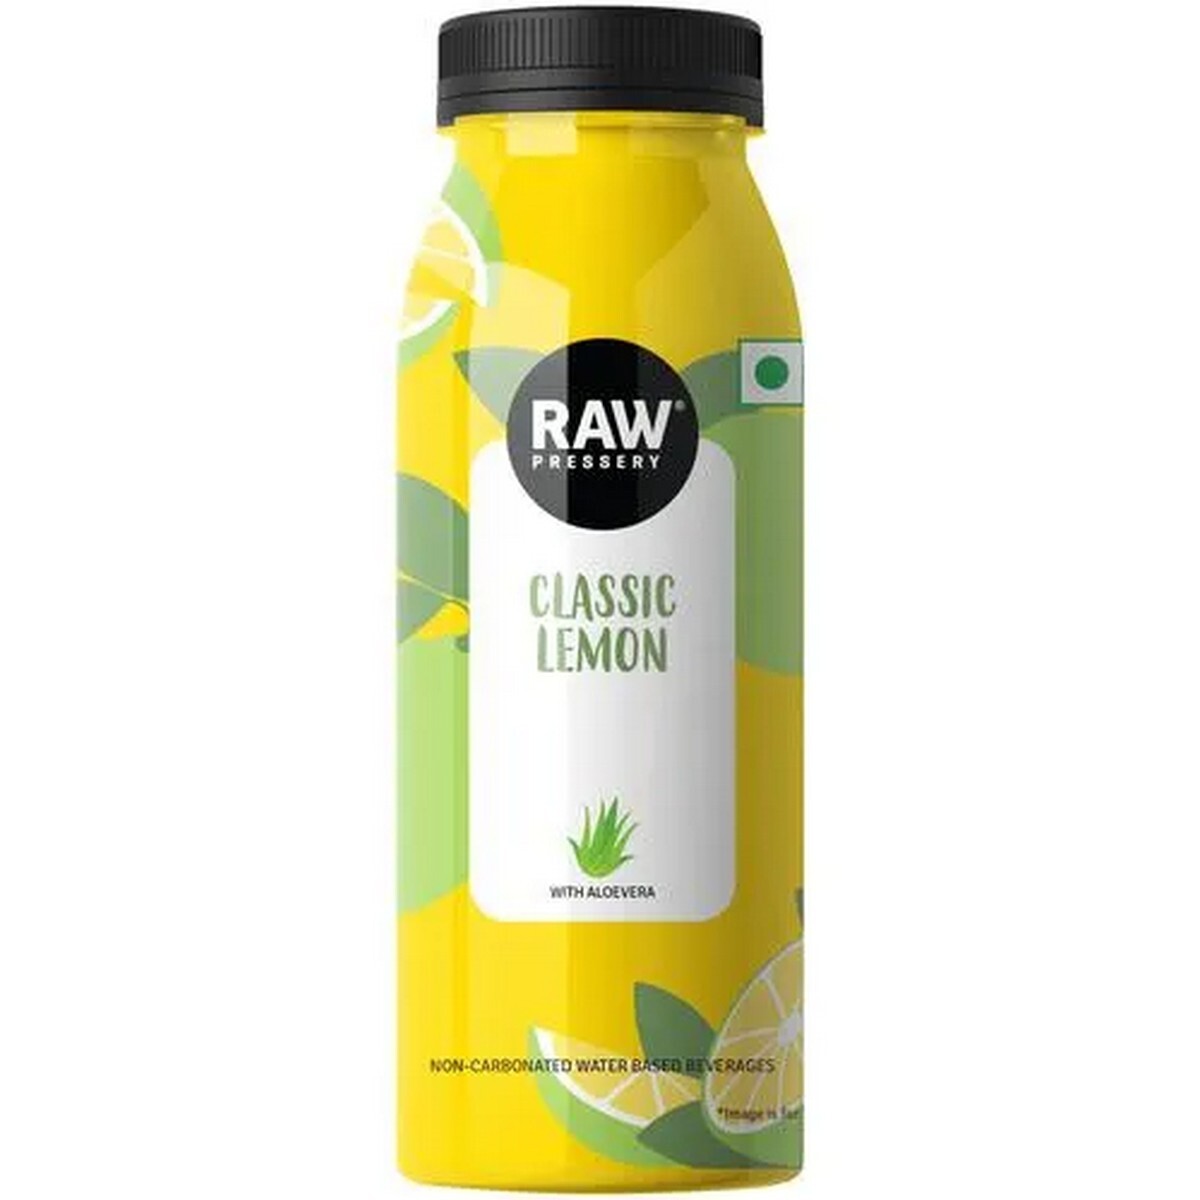 Raw Pressery Classic Lemon 200ml